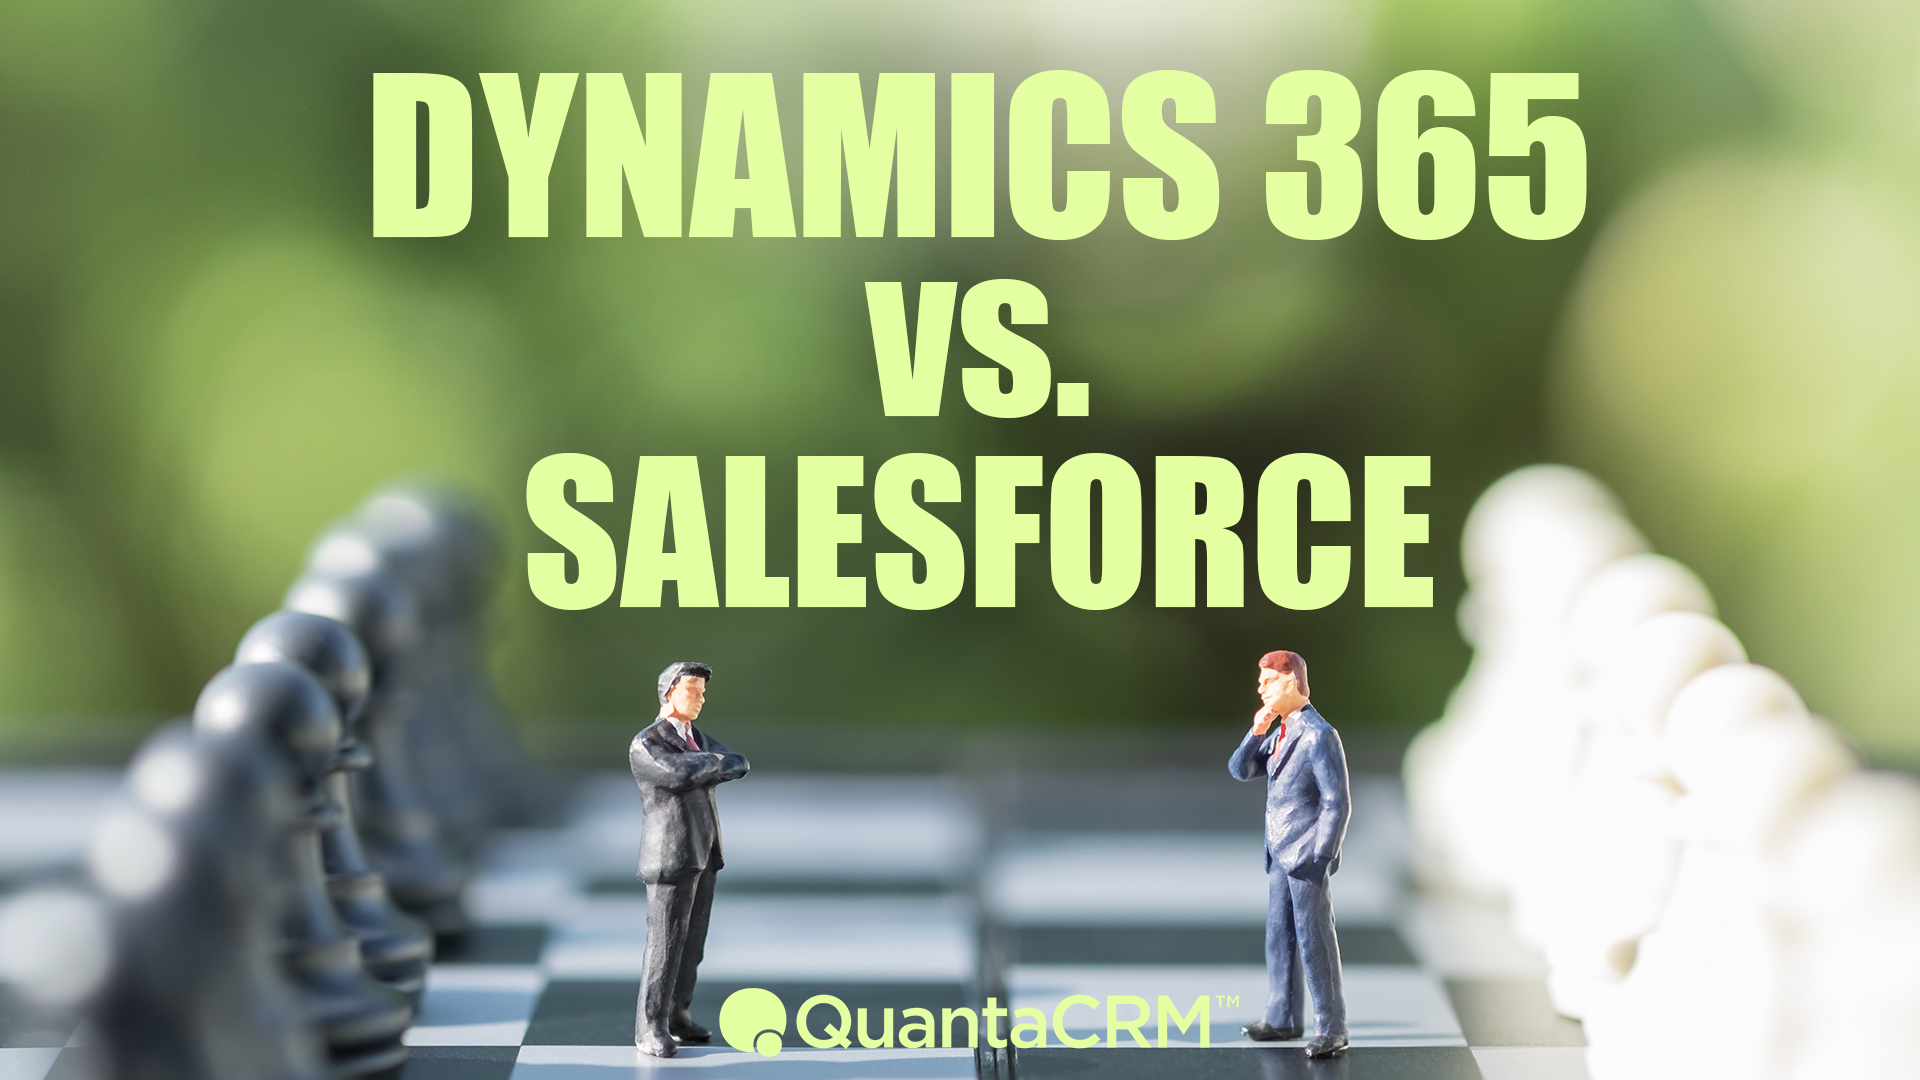 microsoft dynamics vs salesforce cost